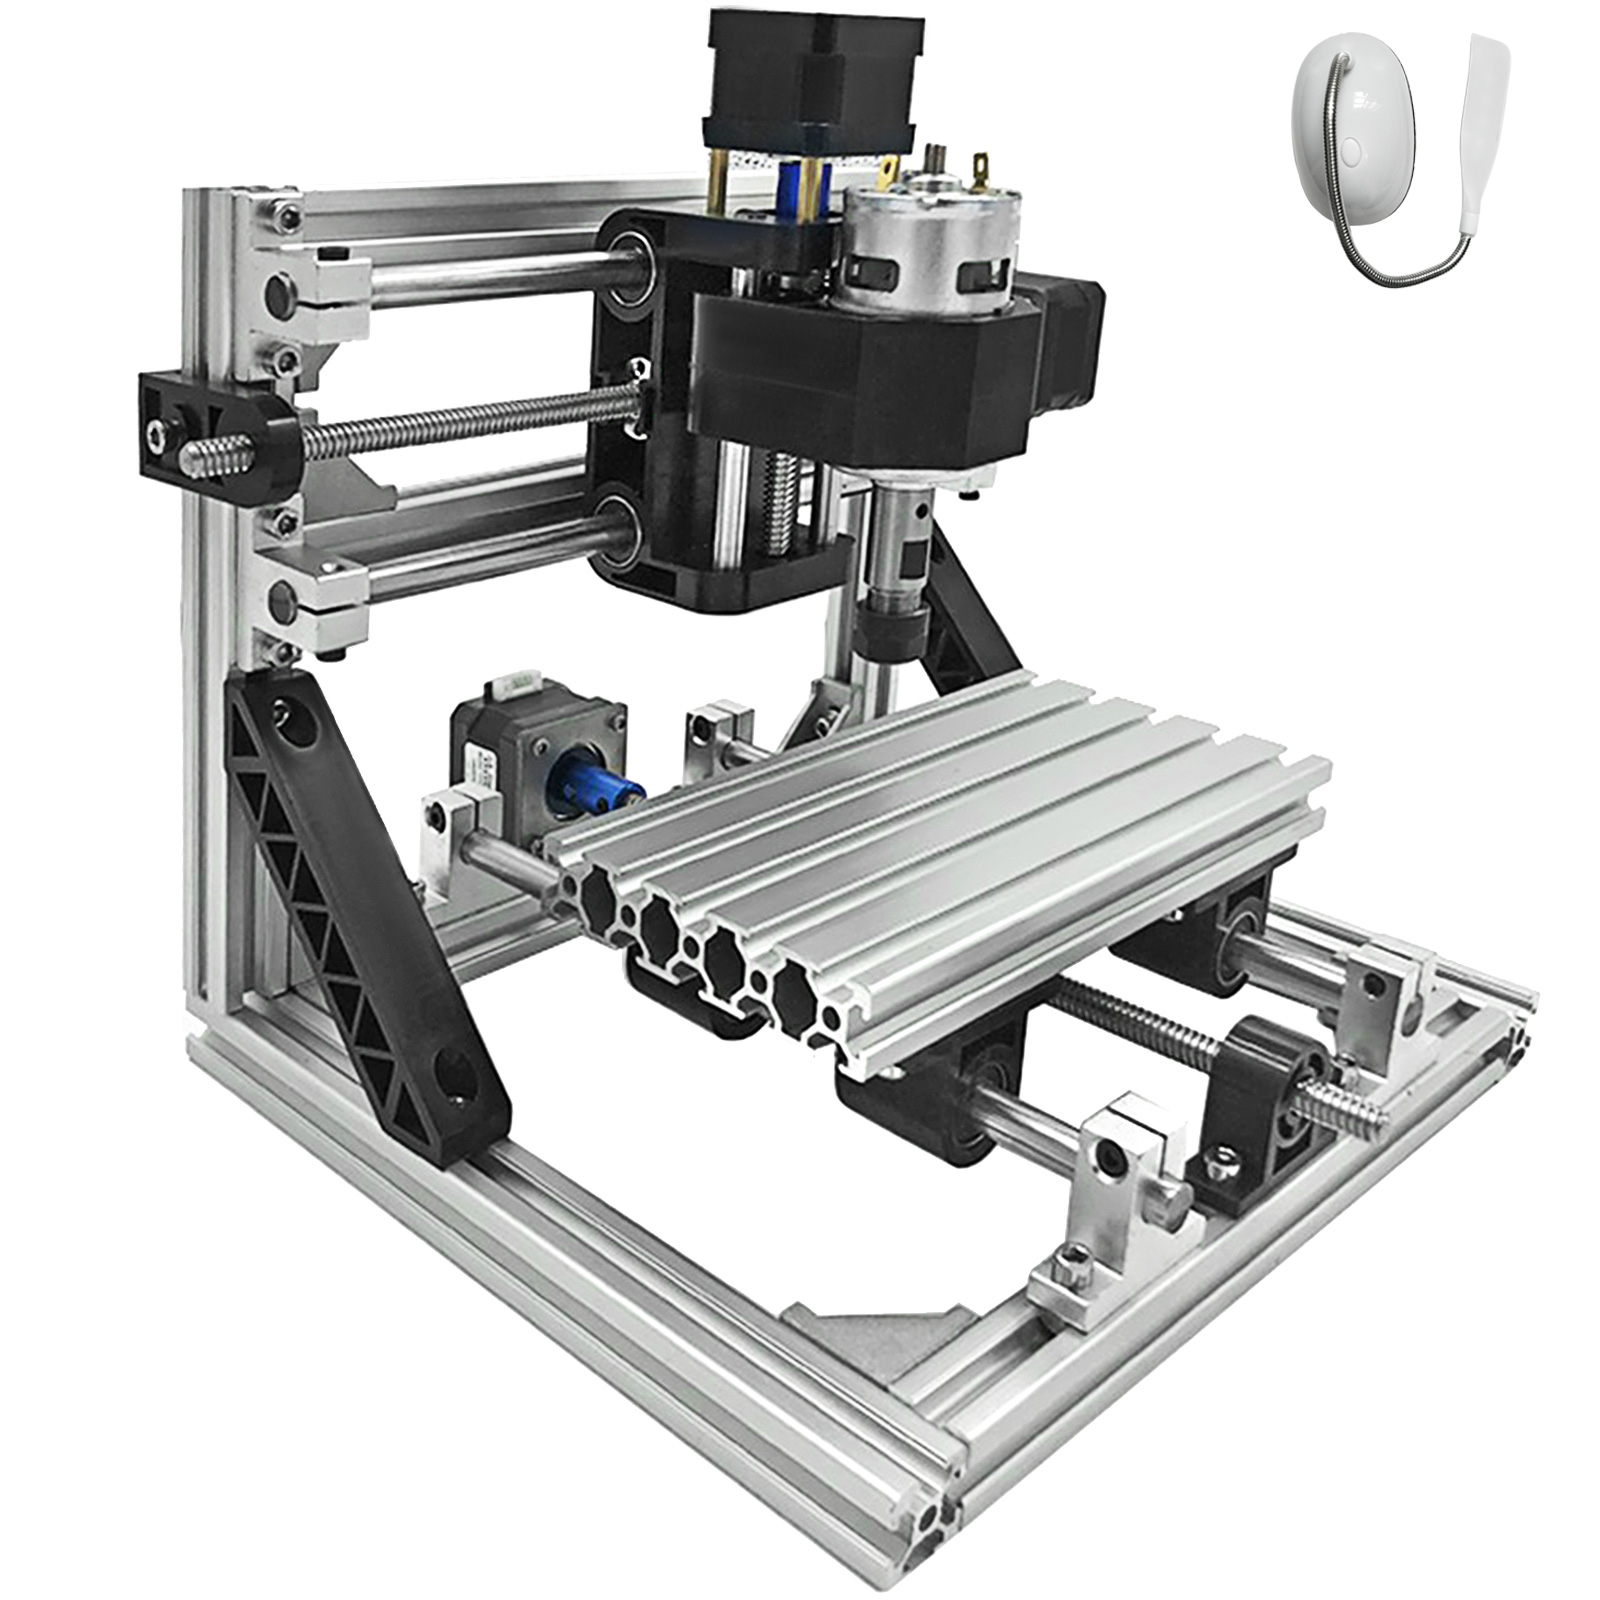 Details about   CNC 1610 Pro ER11 GRBL Laser Engraving Machine DIY Router Kit Mill Pcb Wood Pvc 